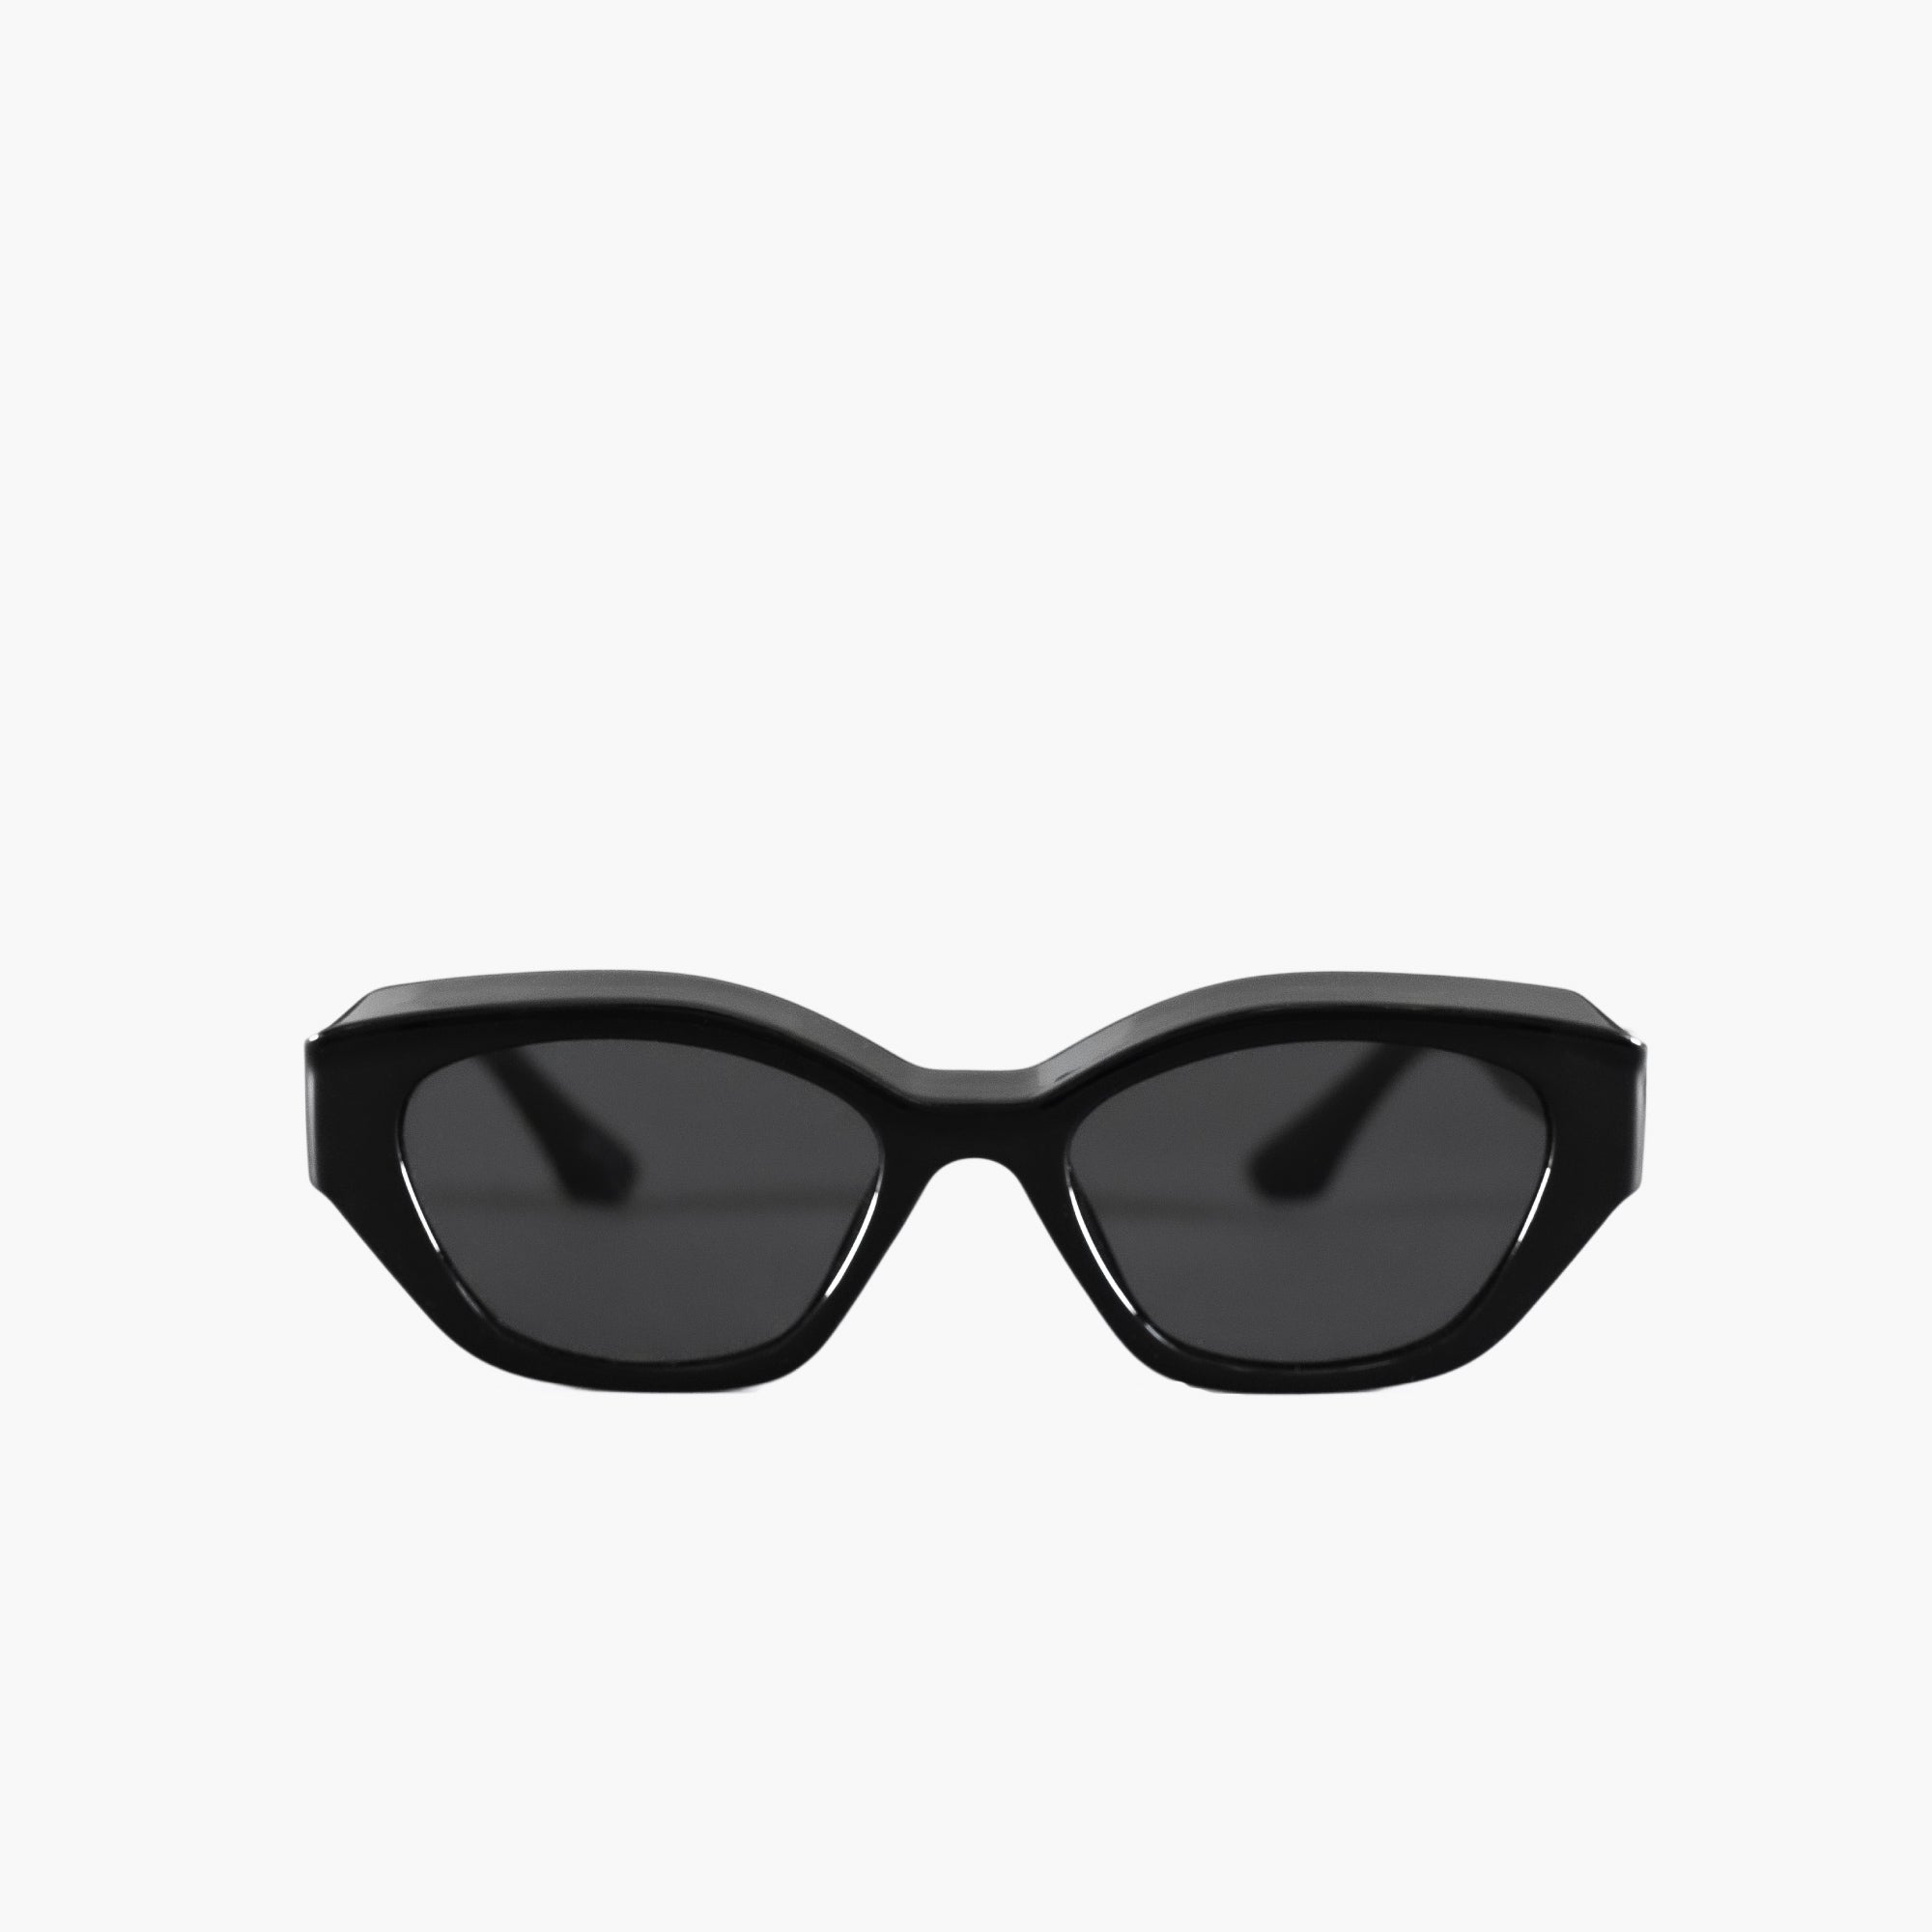 Irregular Cat Eye Sunglasses